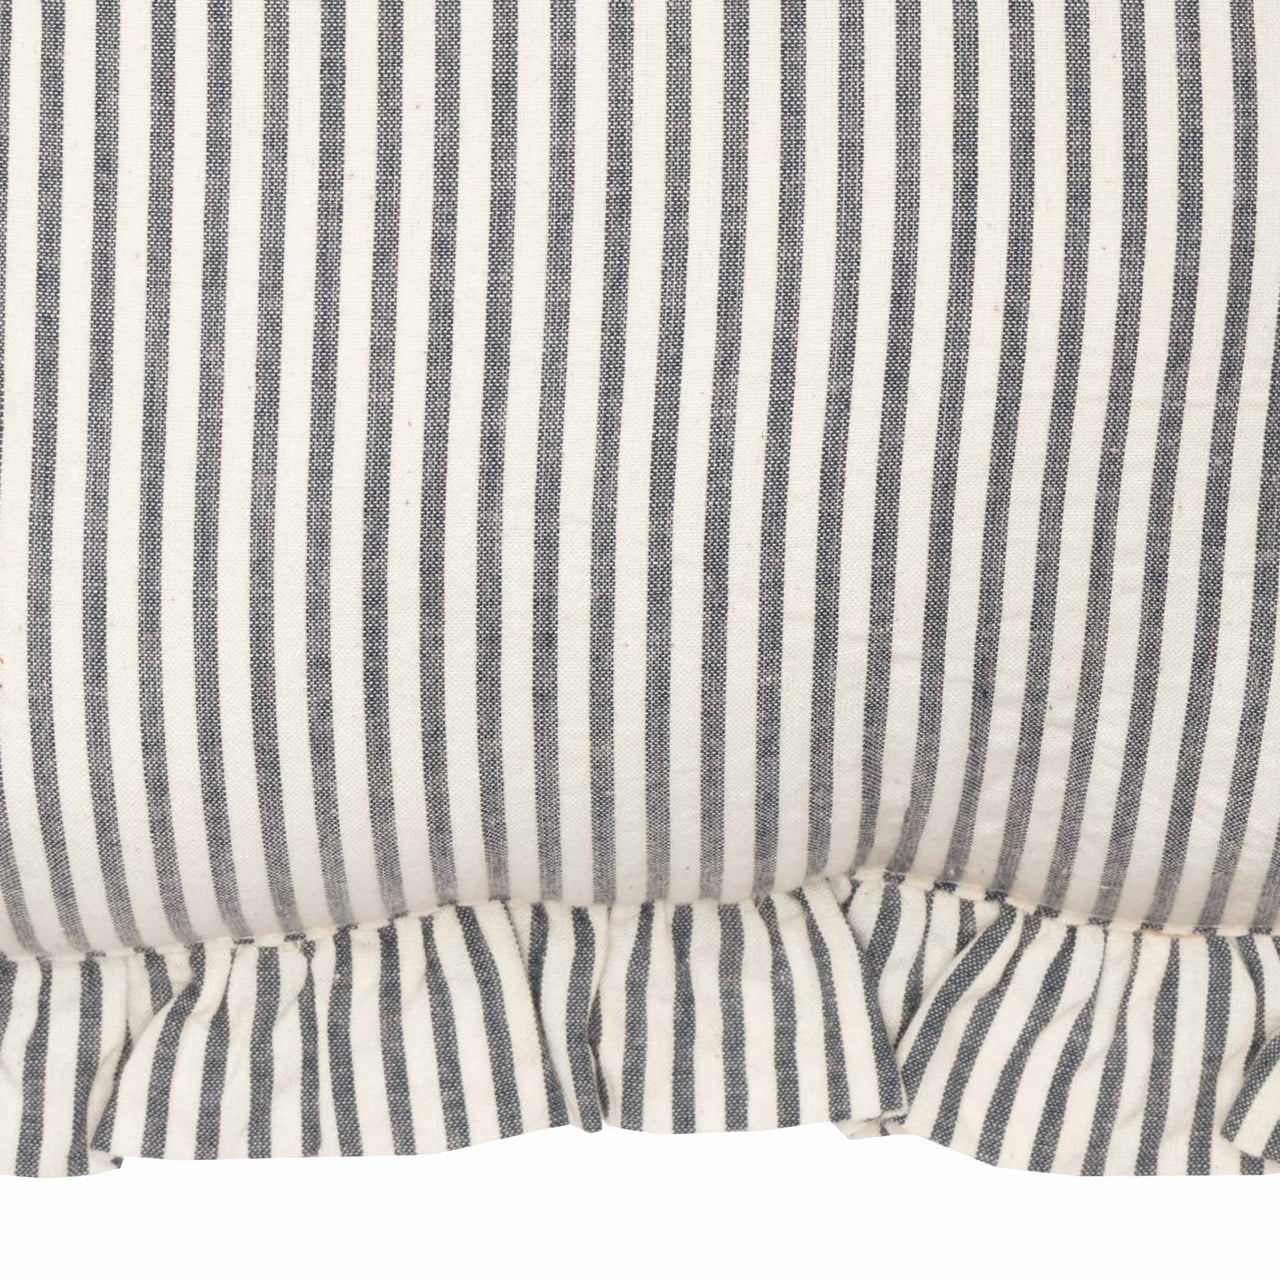 Hatteras Seersucker Blue Ticking Stripe Fabric Pillow 14x22 VHC Brands